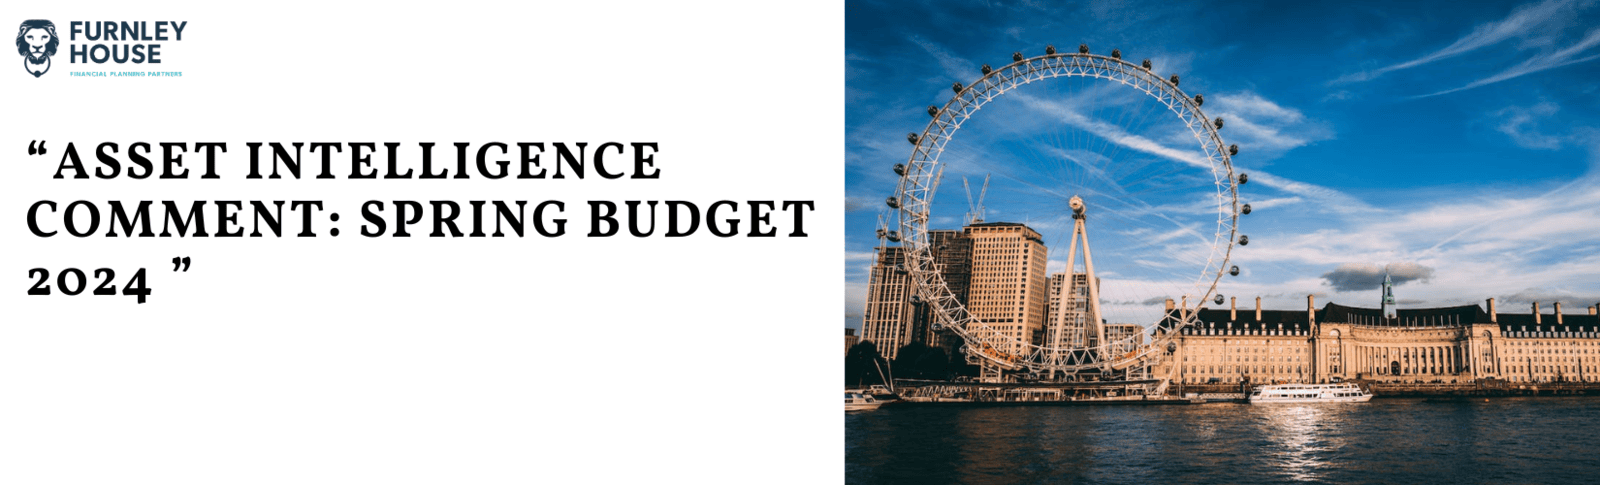 Asset Intelligence Comment: Budget 2024